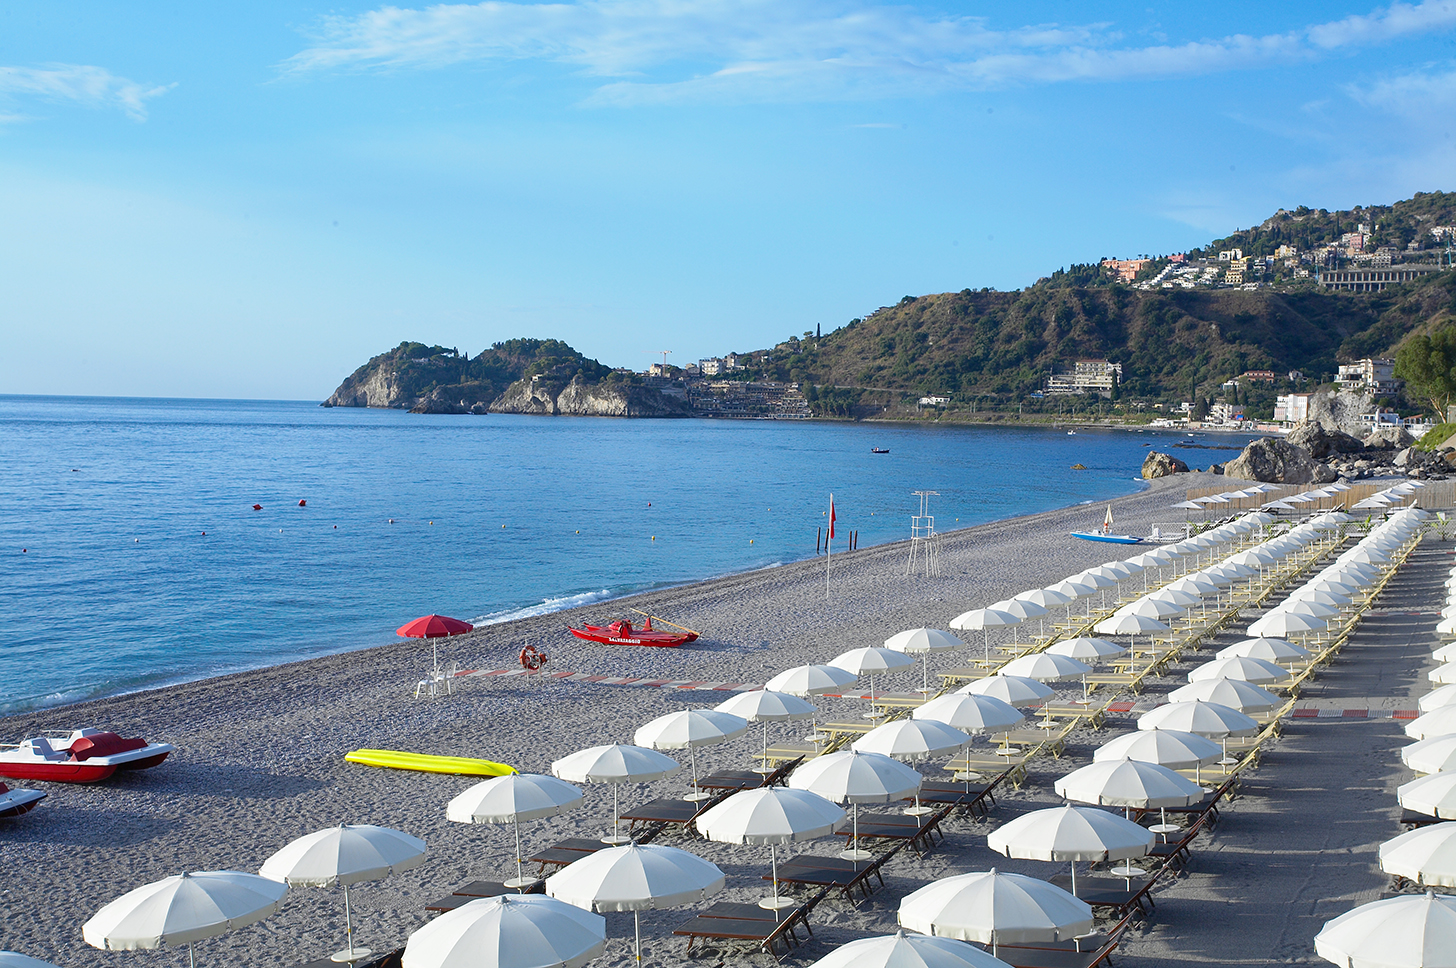 Foto av Spiaggia di Mazzeo med hög nivå av renlighet